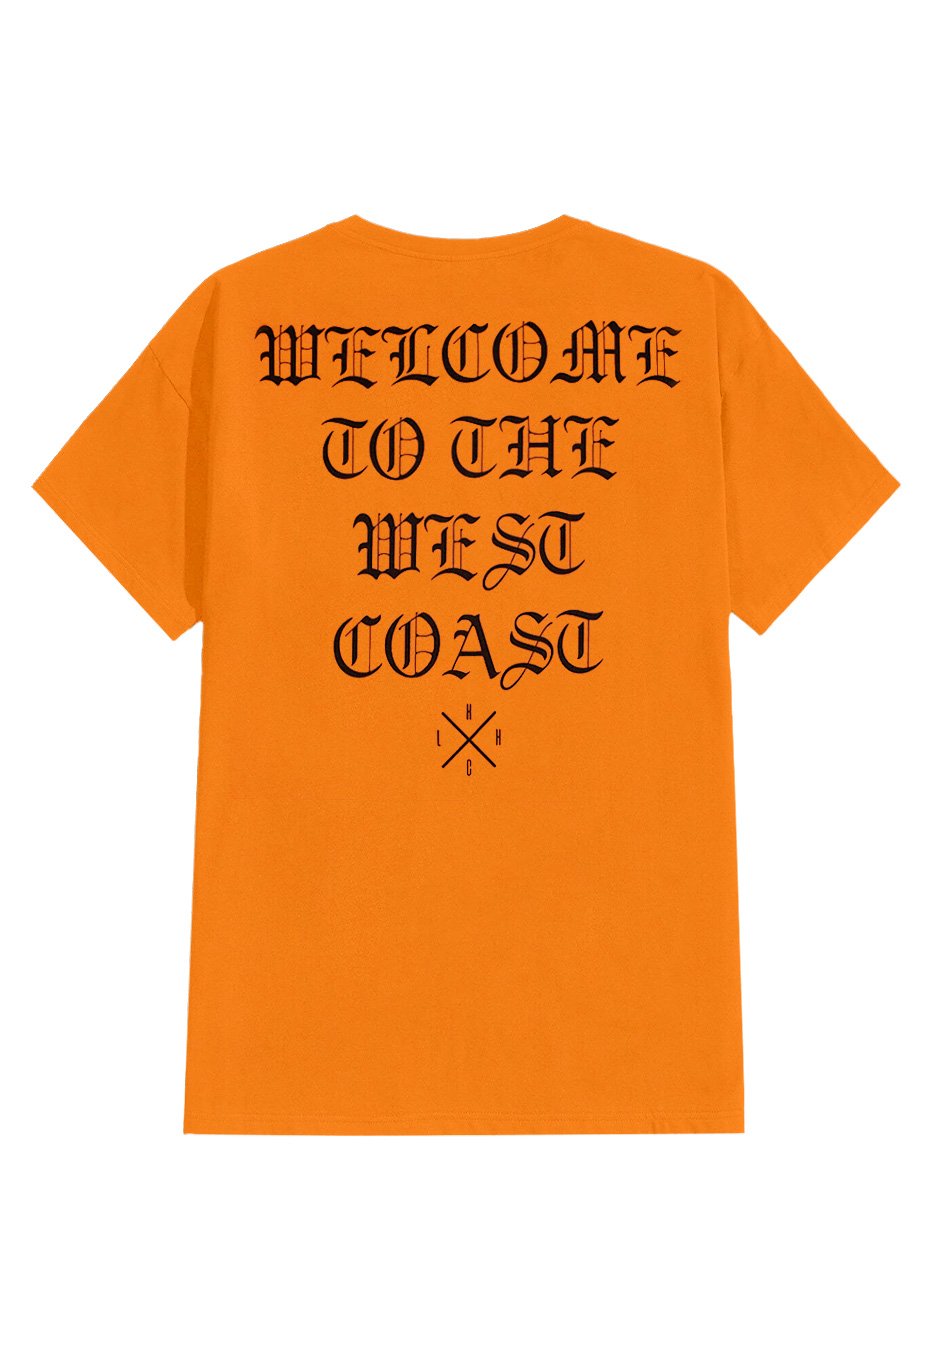 Lionheart - WTTWC Orange - T-Shirt